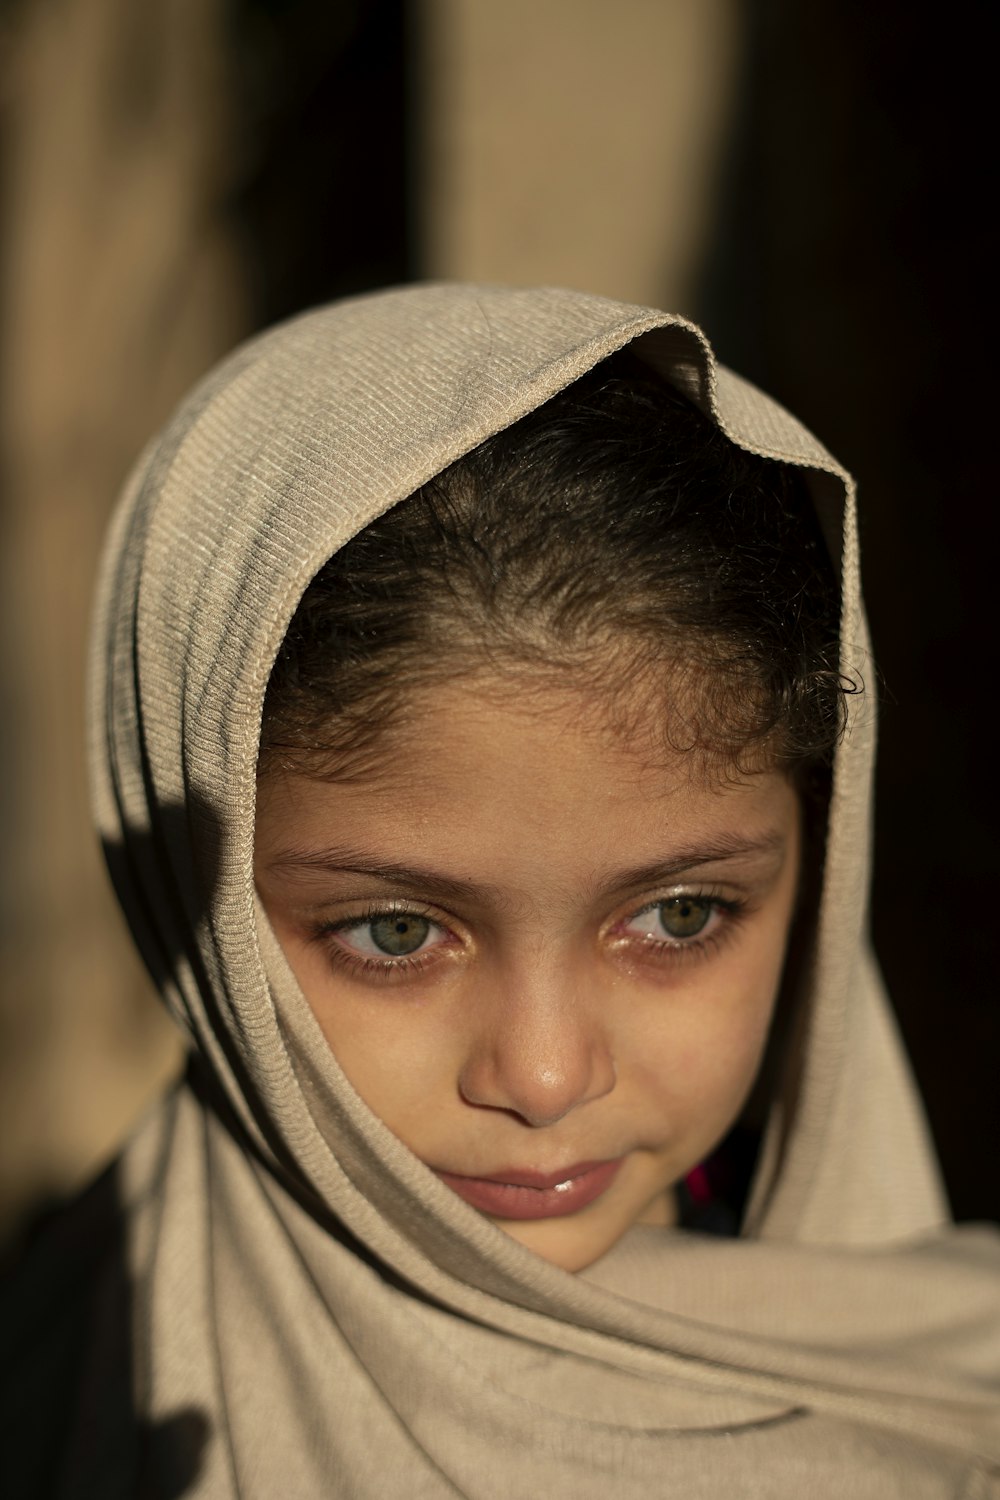 30k+ Muslim Child Pictures | Download Free Images on Unsplash